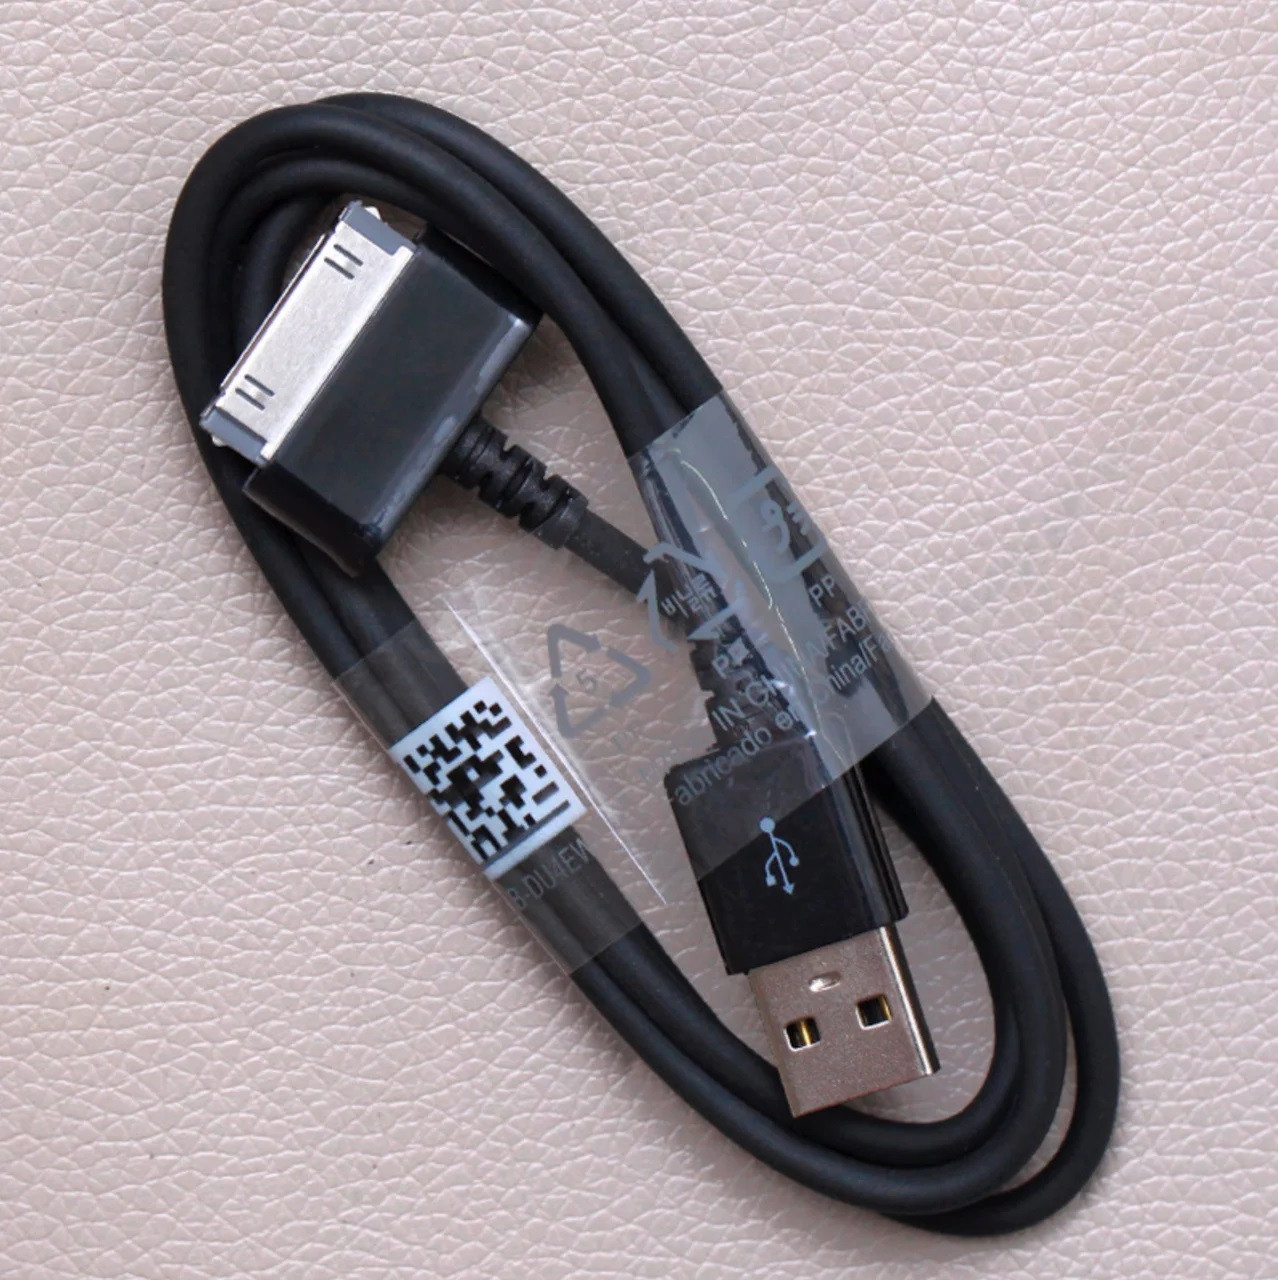 Кабель USB Samsung Galaxy Tab P3100 P3110 GT-P5100 P5110 P6200 P6800 GT-P7500 P7510 N8000